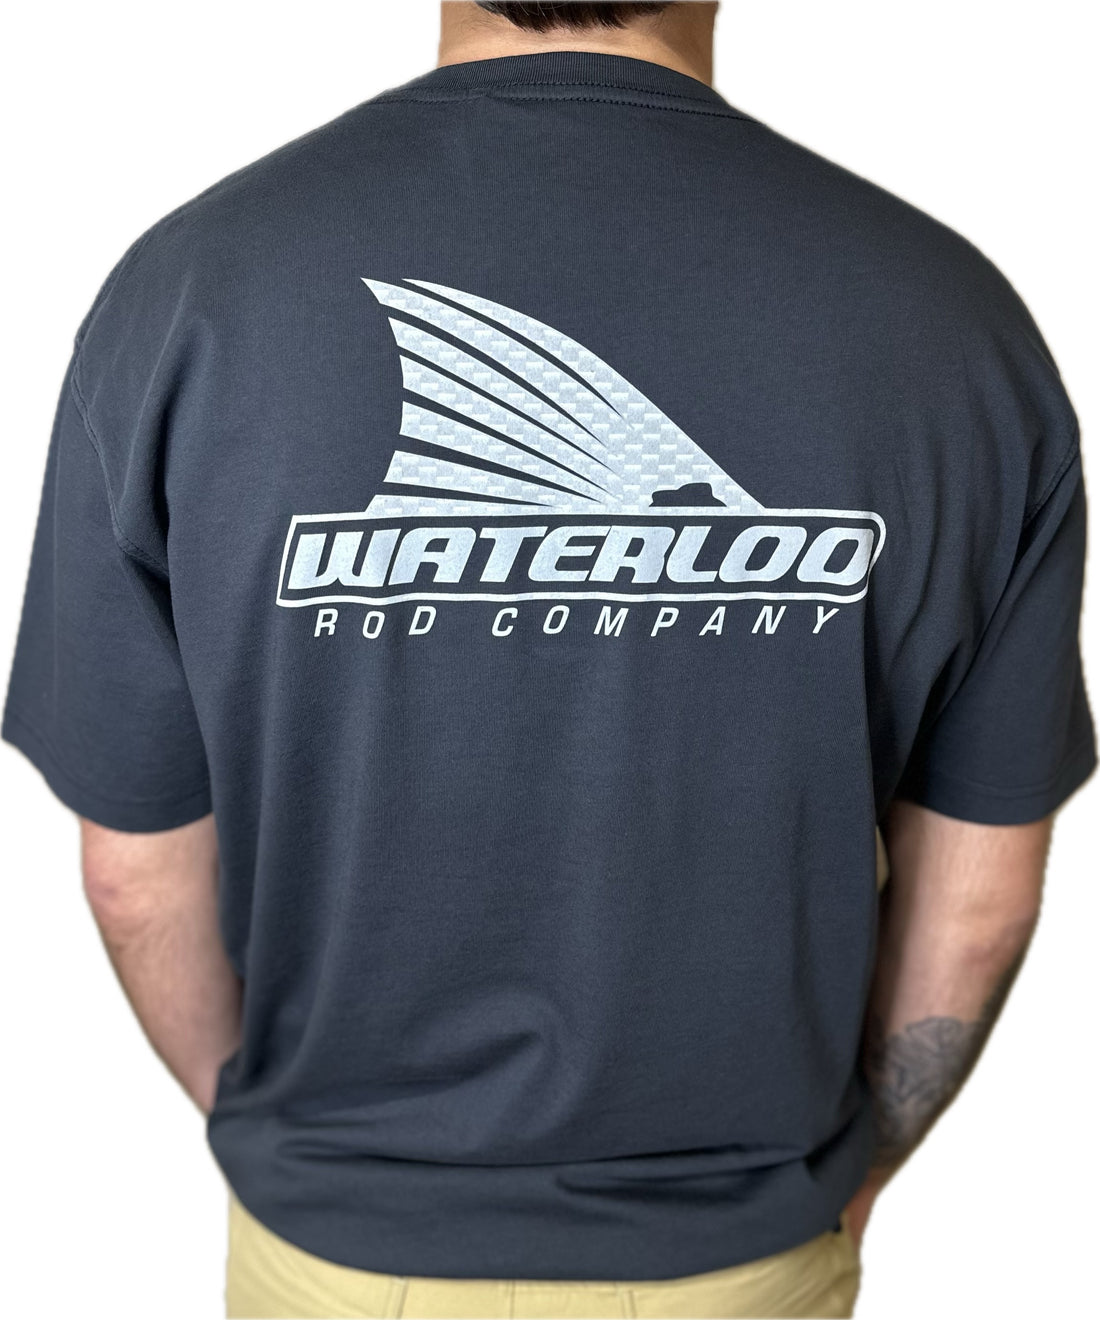 Waterloo Dark Grey Cotton Short Sleeve T-Shirt -  Carbon Fiber Tails Up Logo